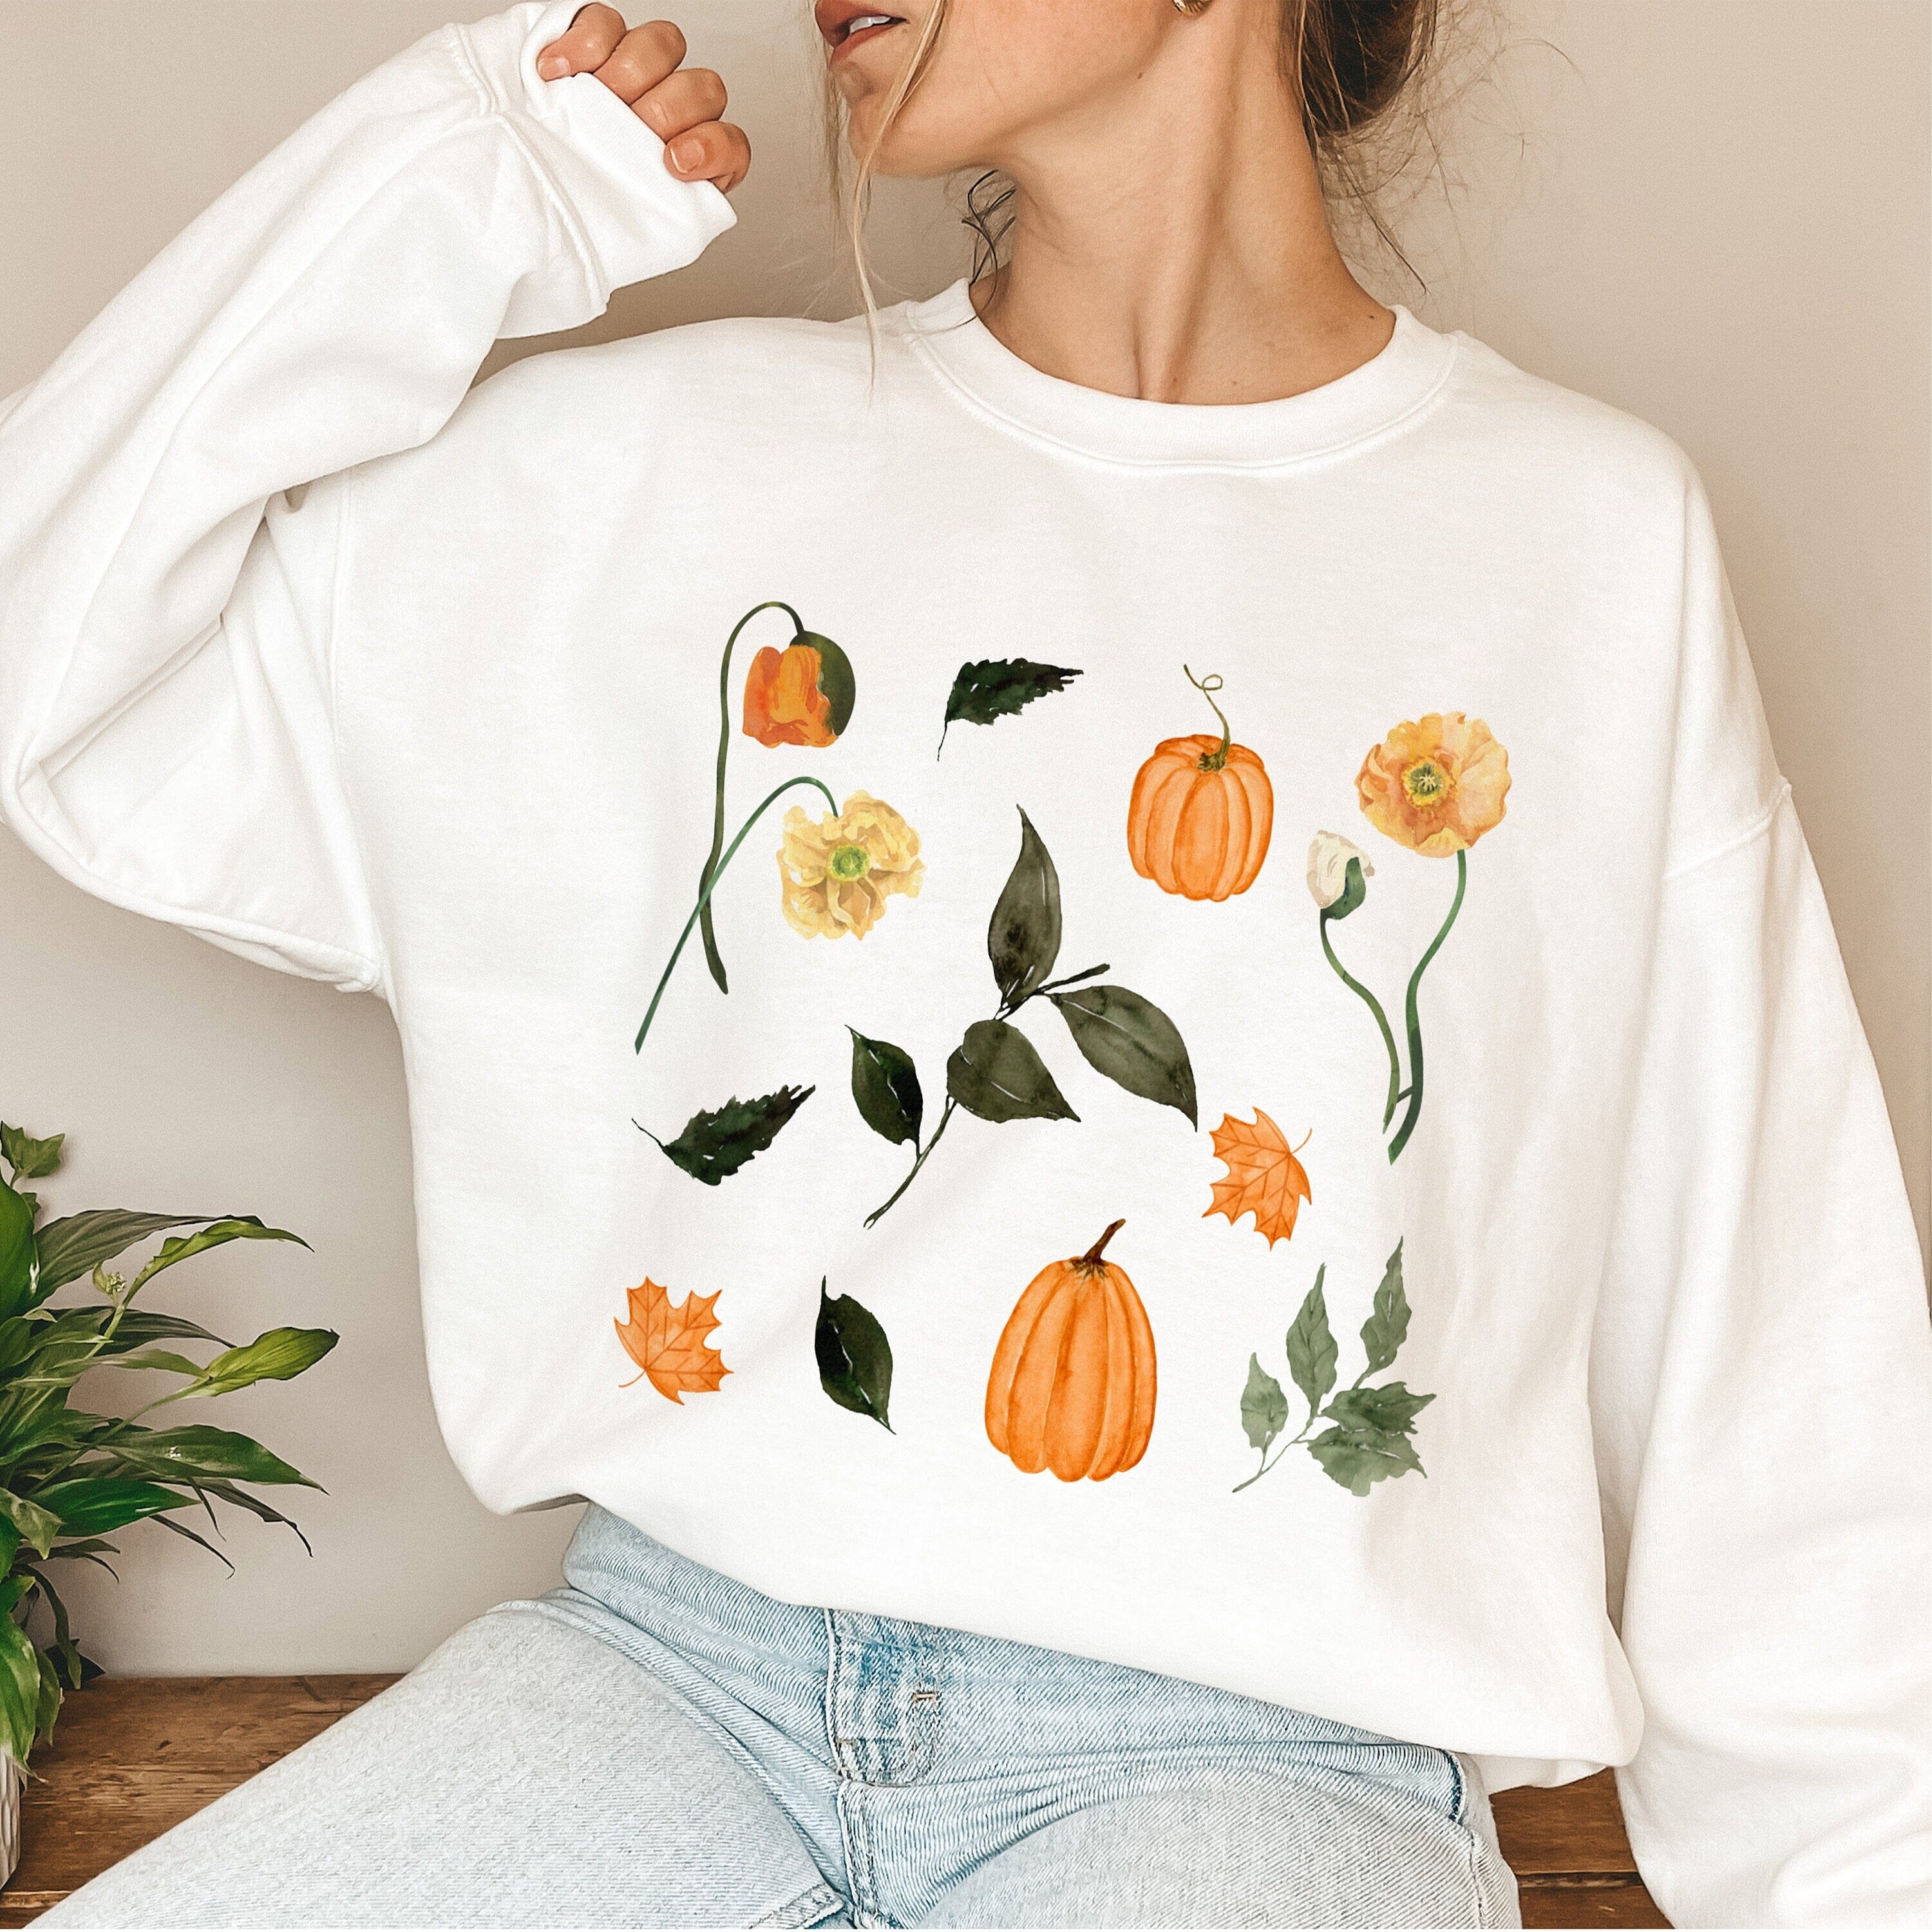 Autumn Flowers And Pumpkins Sweatshirt, Gift For Her Women Trendy Jumper Autumn Concept Wild Meadow Nature